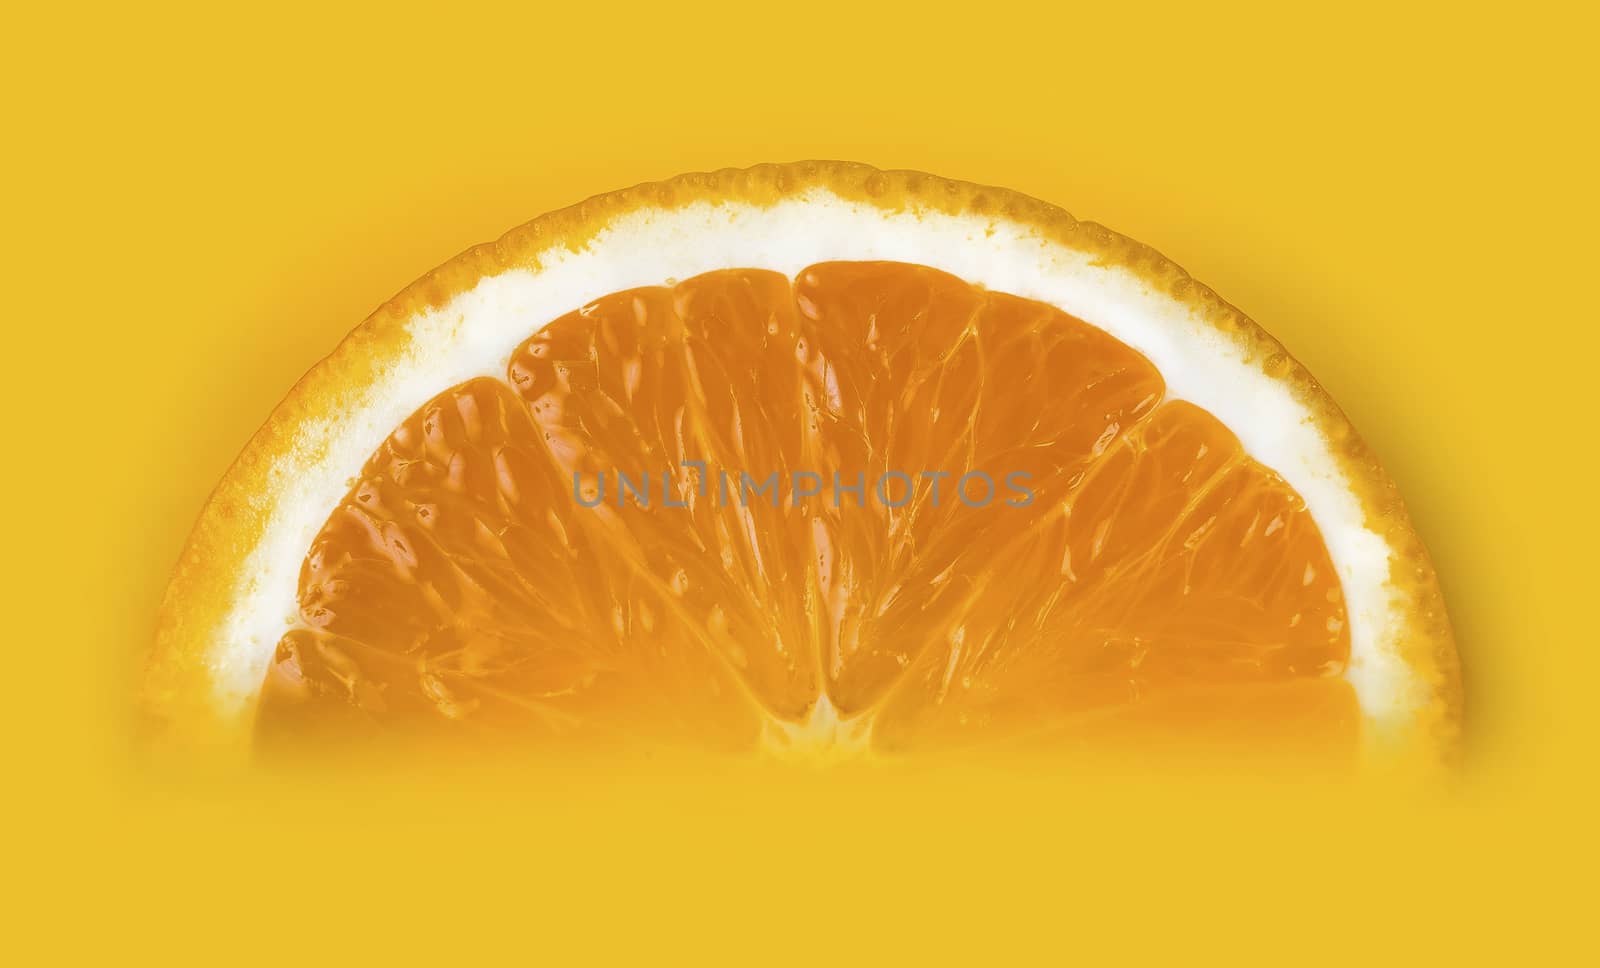  slice of orange close-up lying in the yellow juice